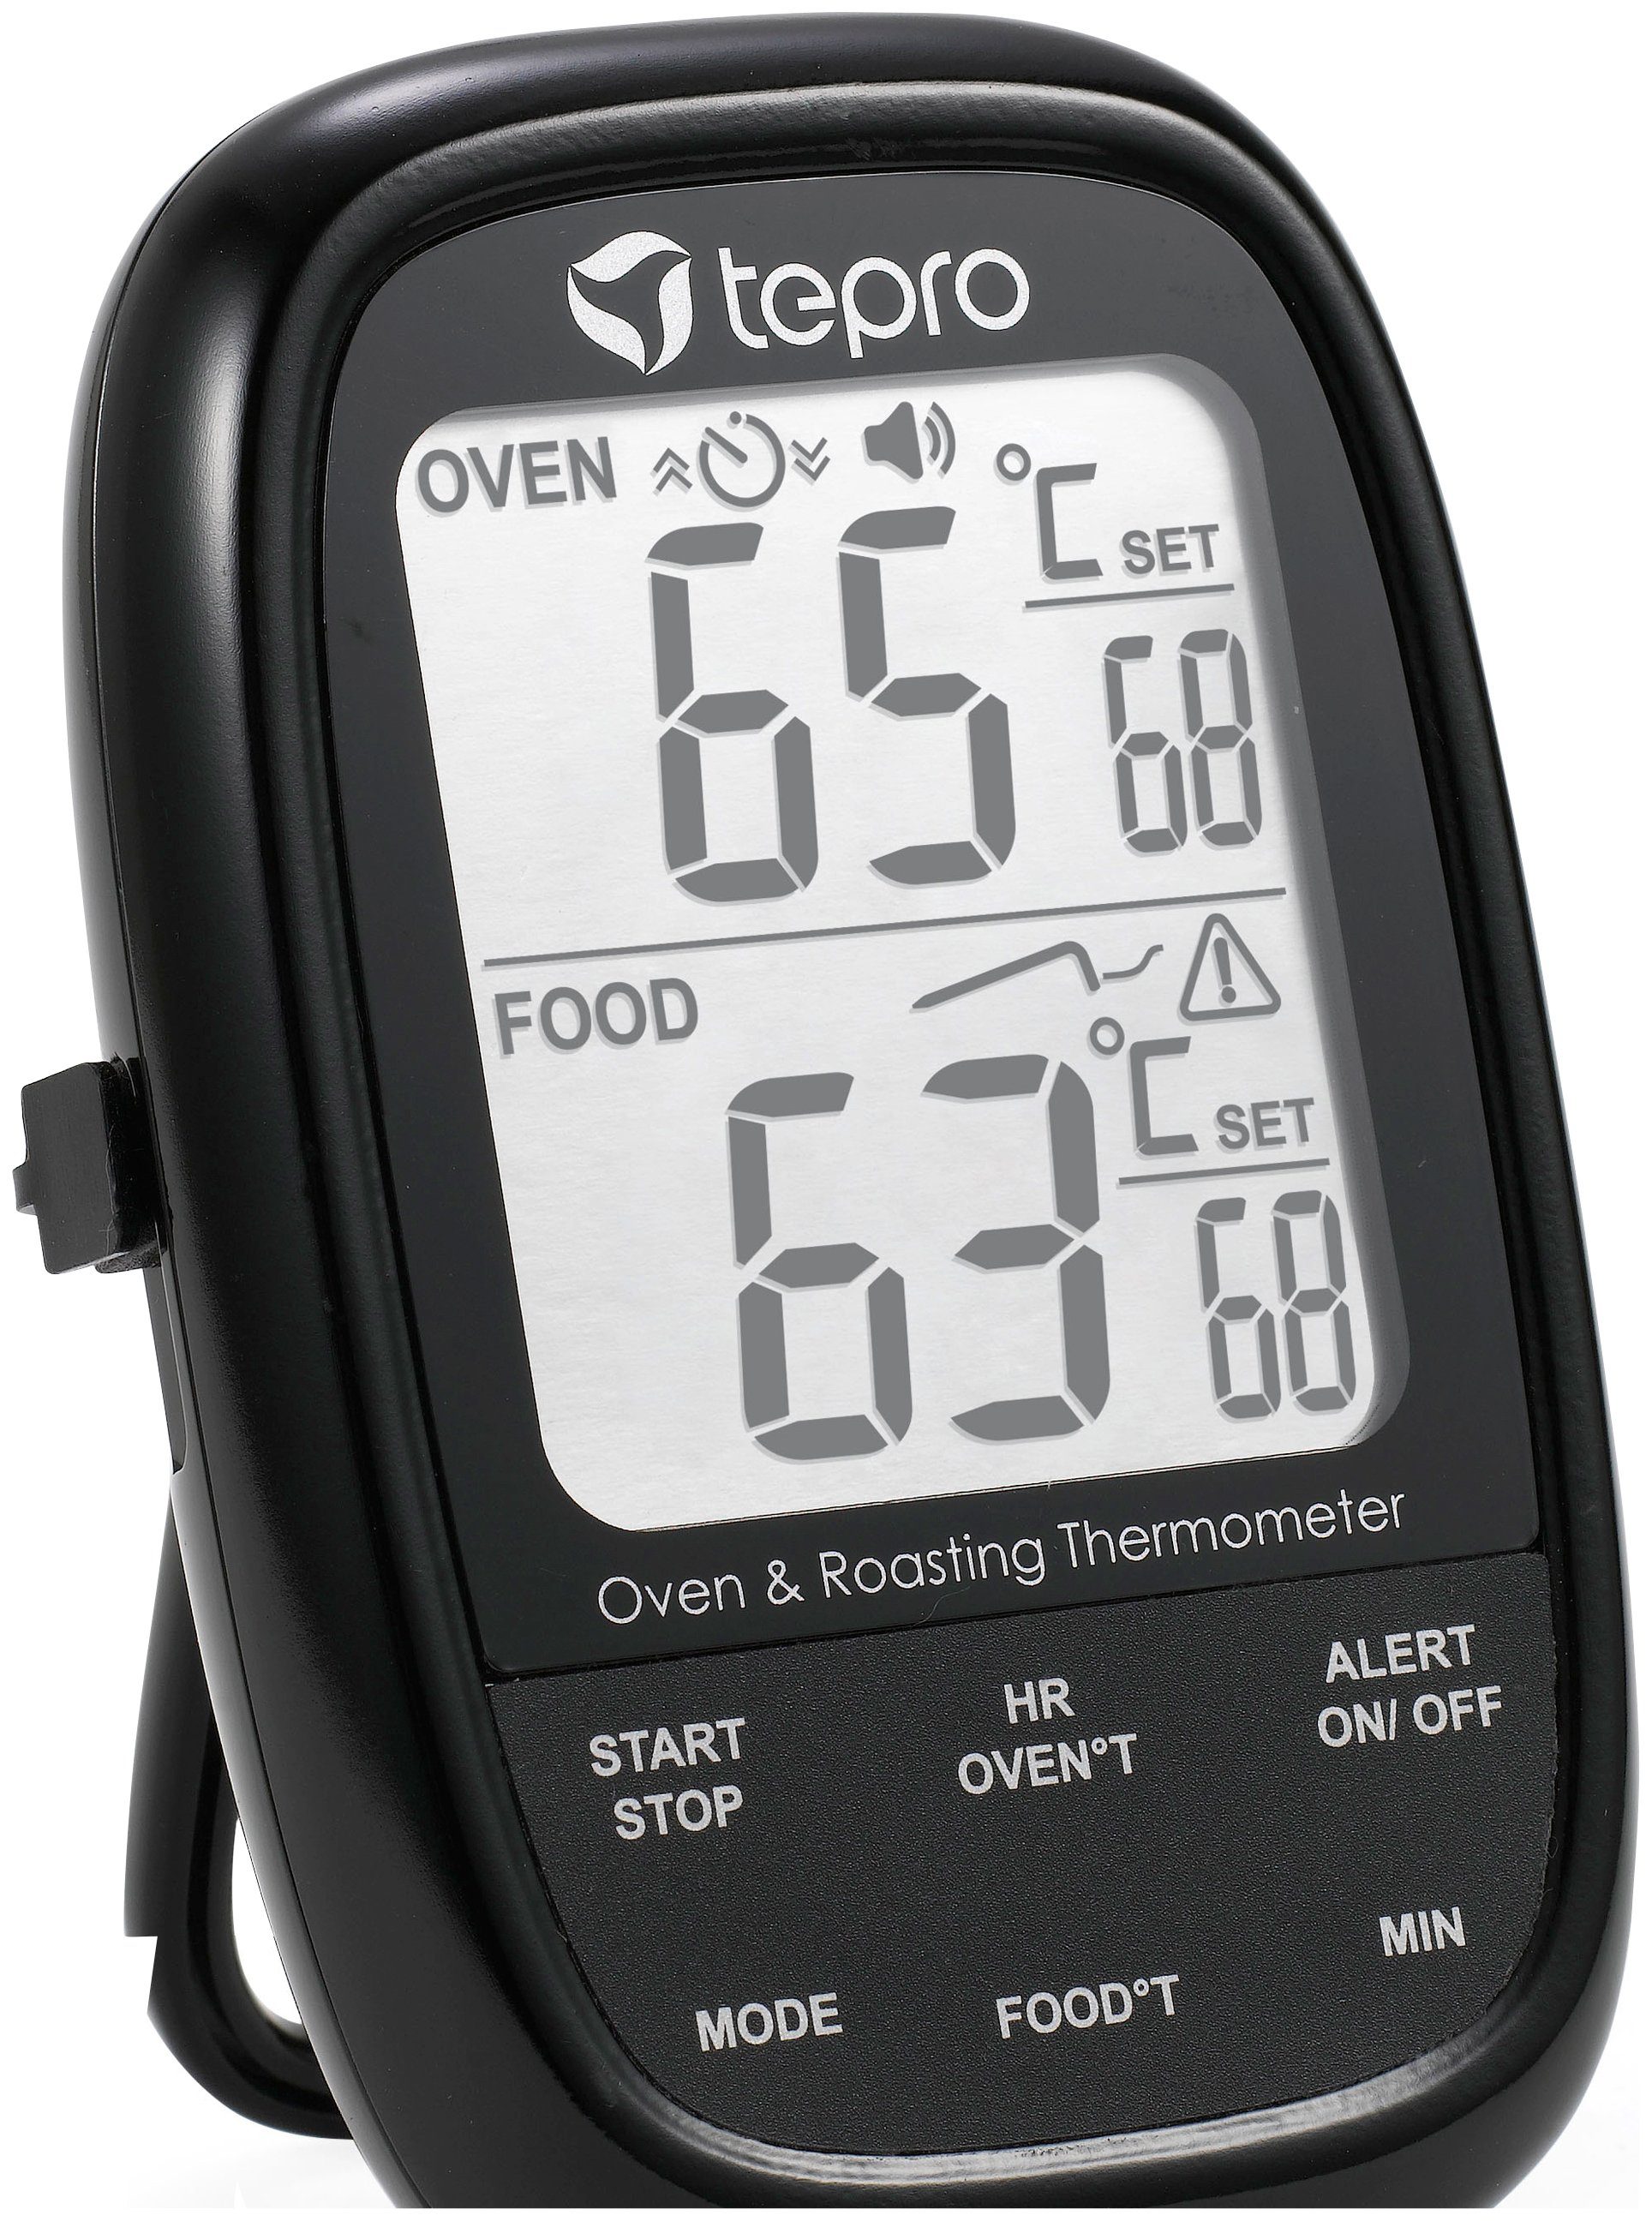 Grillthermometer, mit Tepro Dualsensor